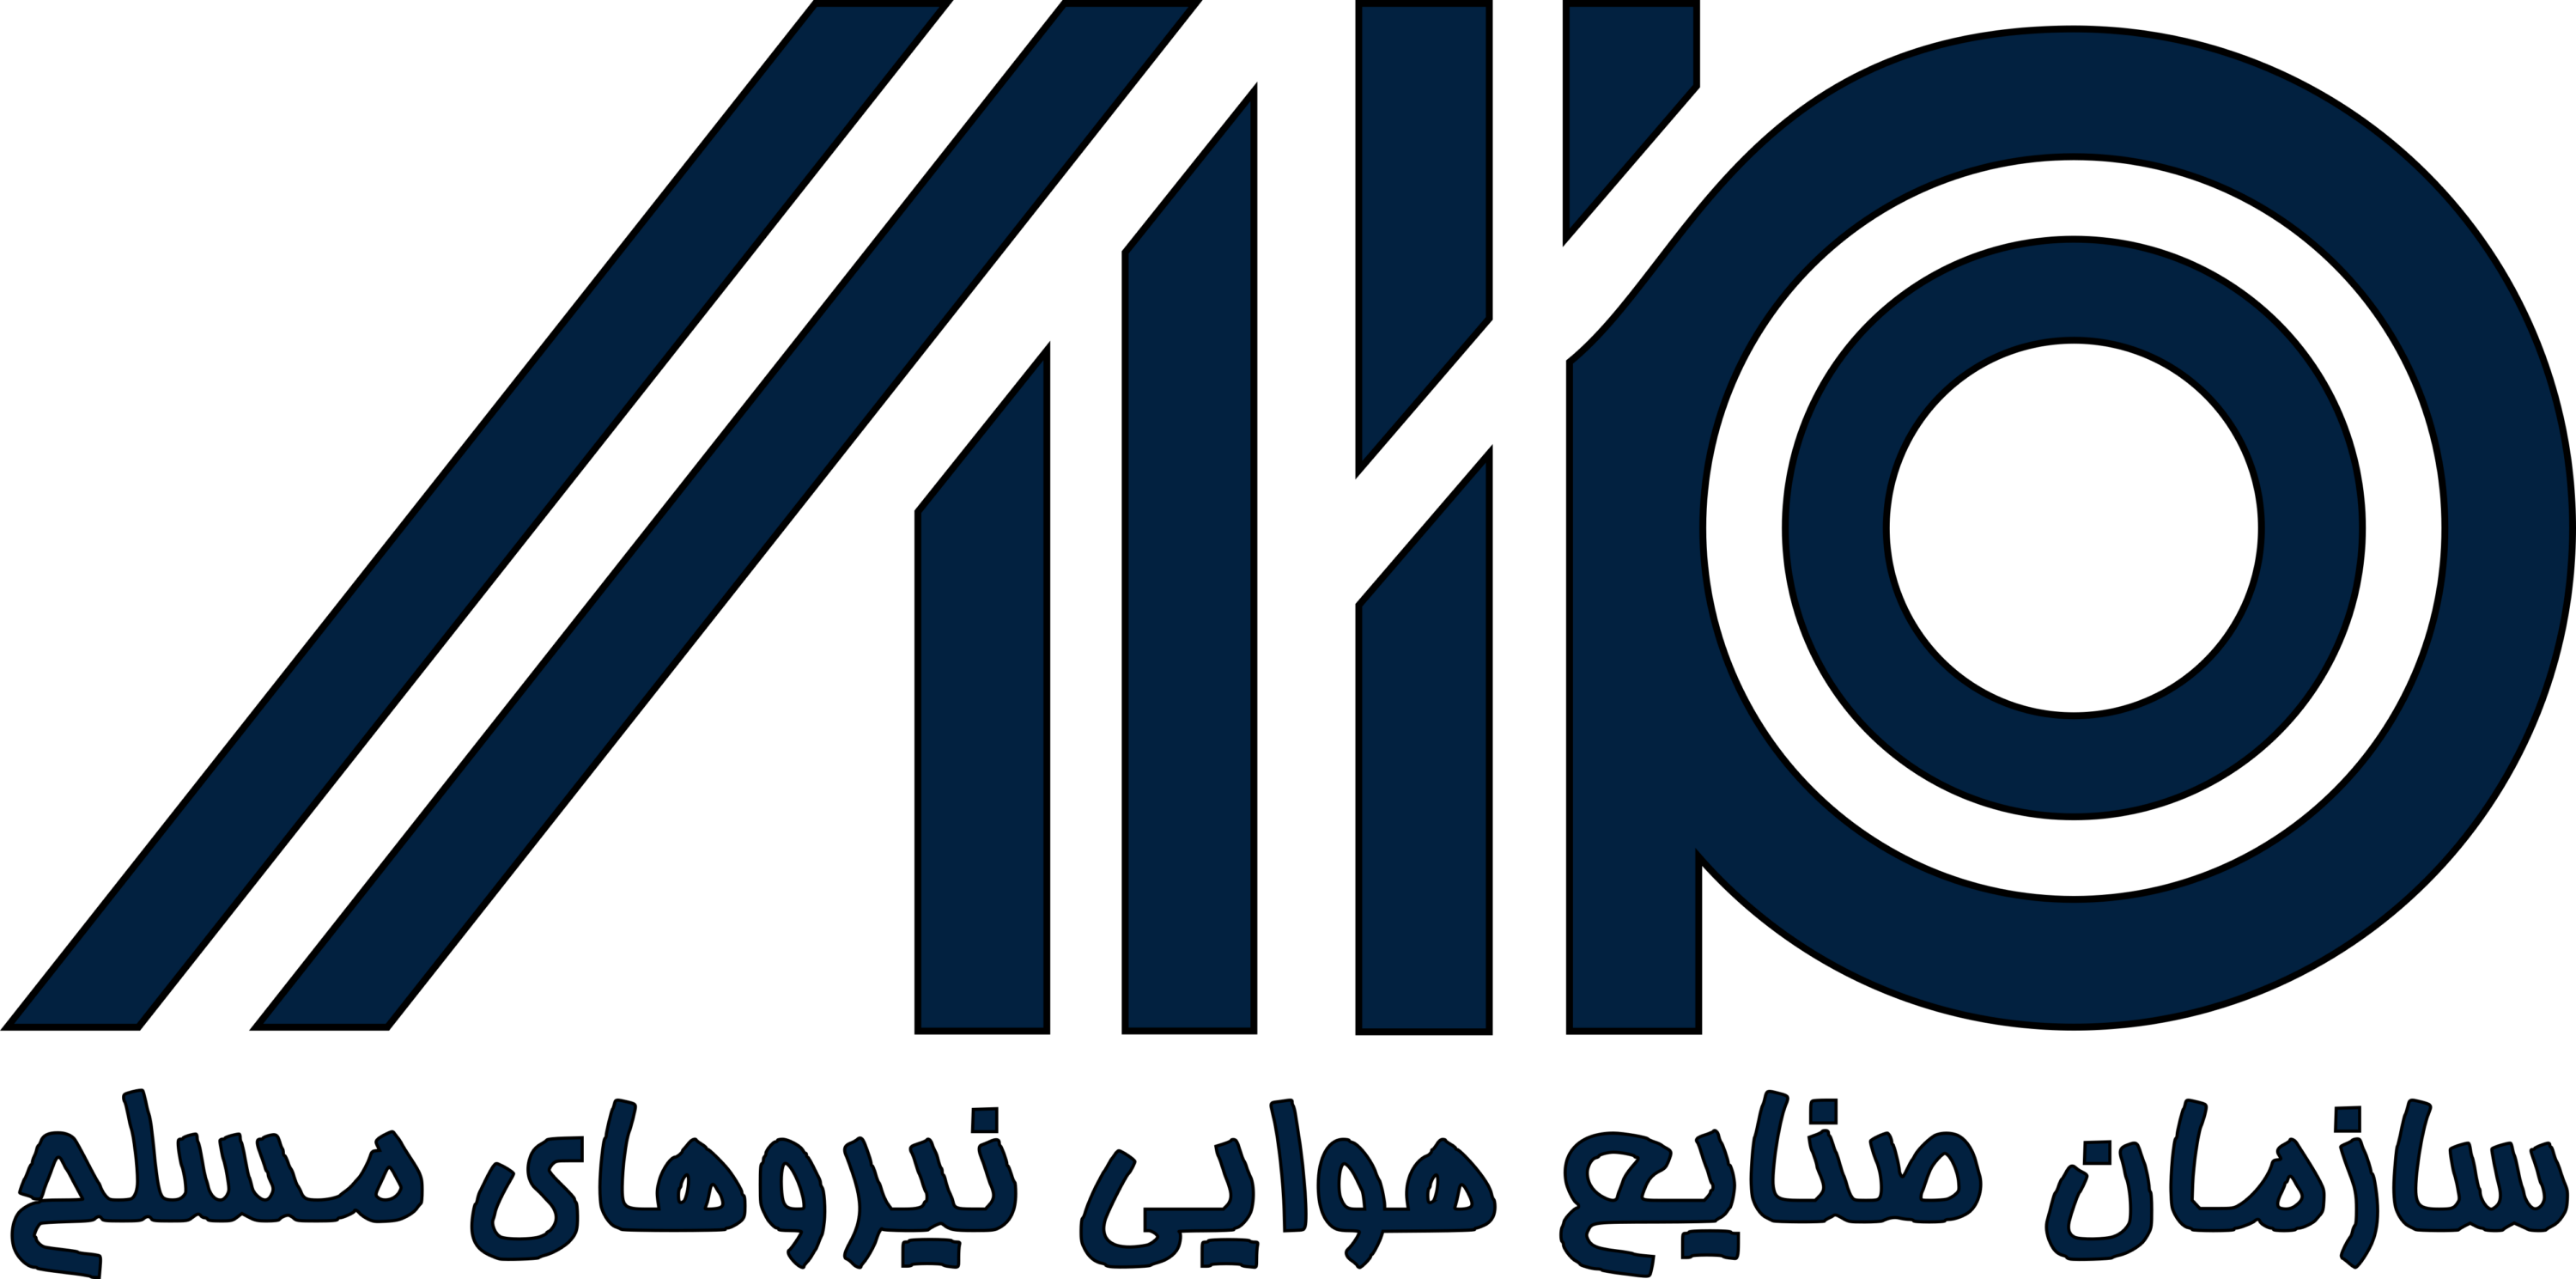 Iran Aviation Industries Organization Logo